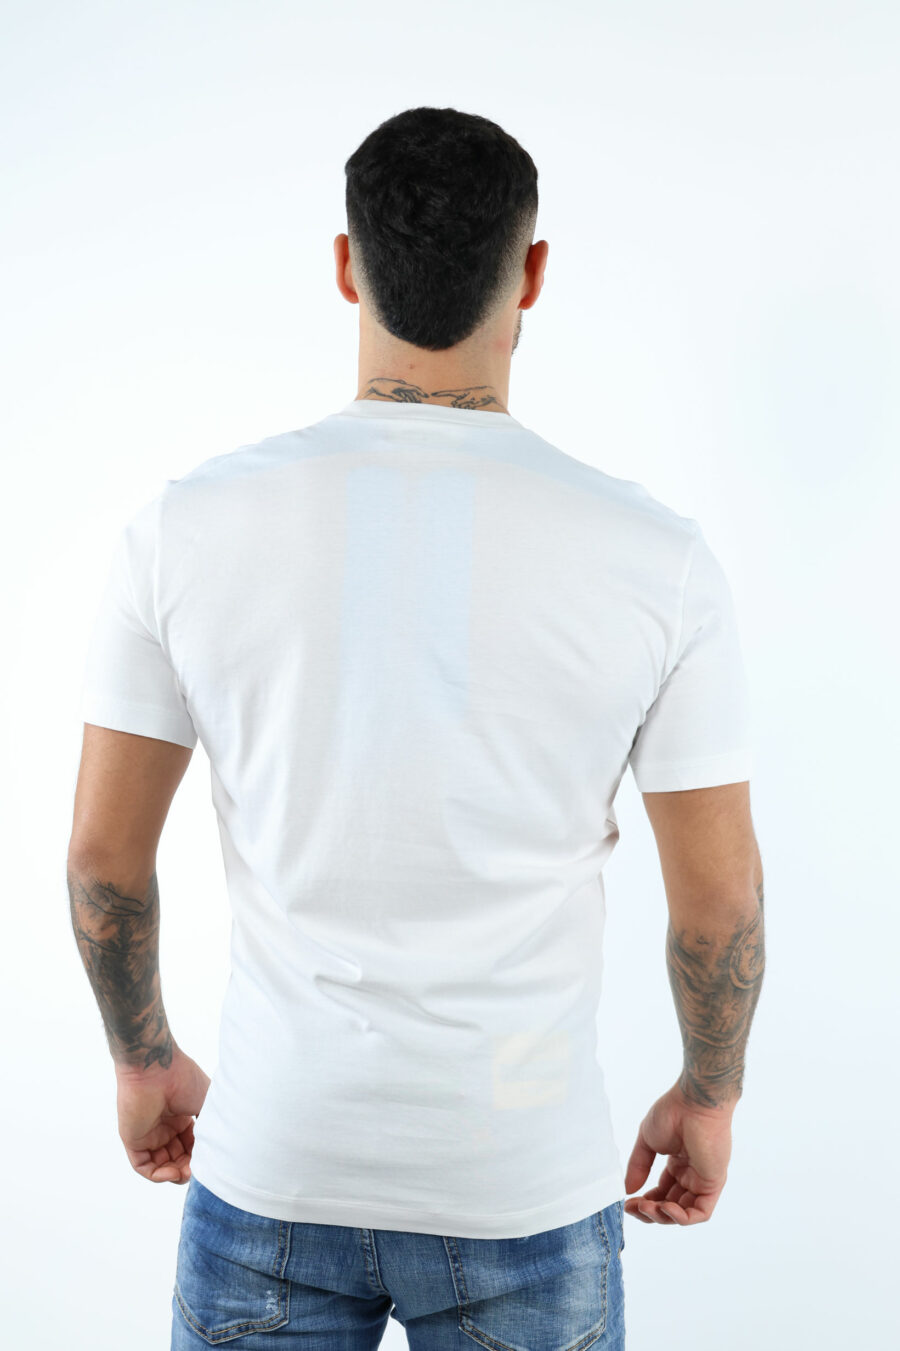 Camiseta blanca con minilogo "suburbans" negro - 106626